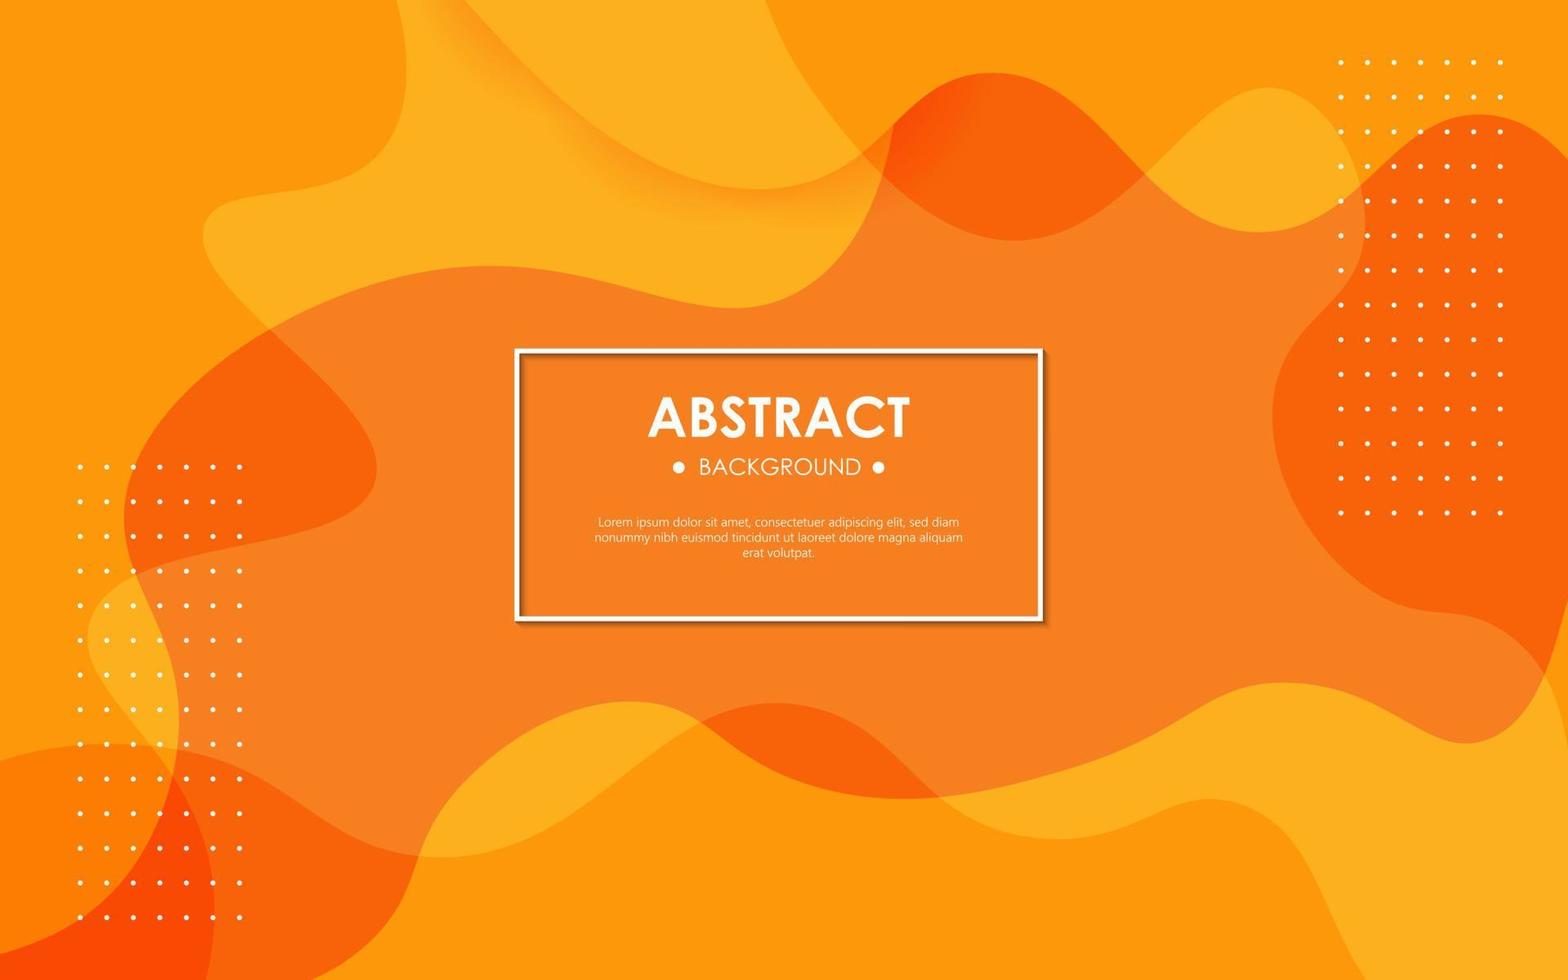 Diseño de fondo texturizado ondulado naranja dinámico abstracto moderno en estilo 3d con color naranja. fondo vectorial eps10. vector